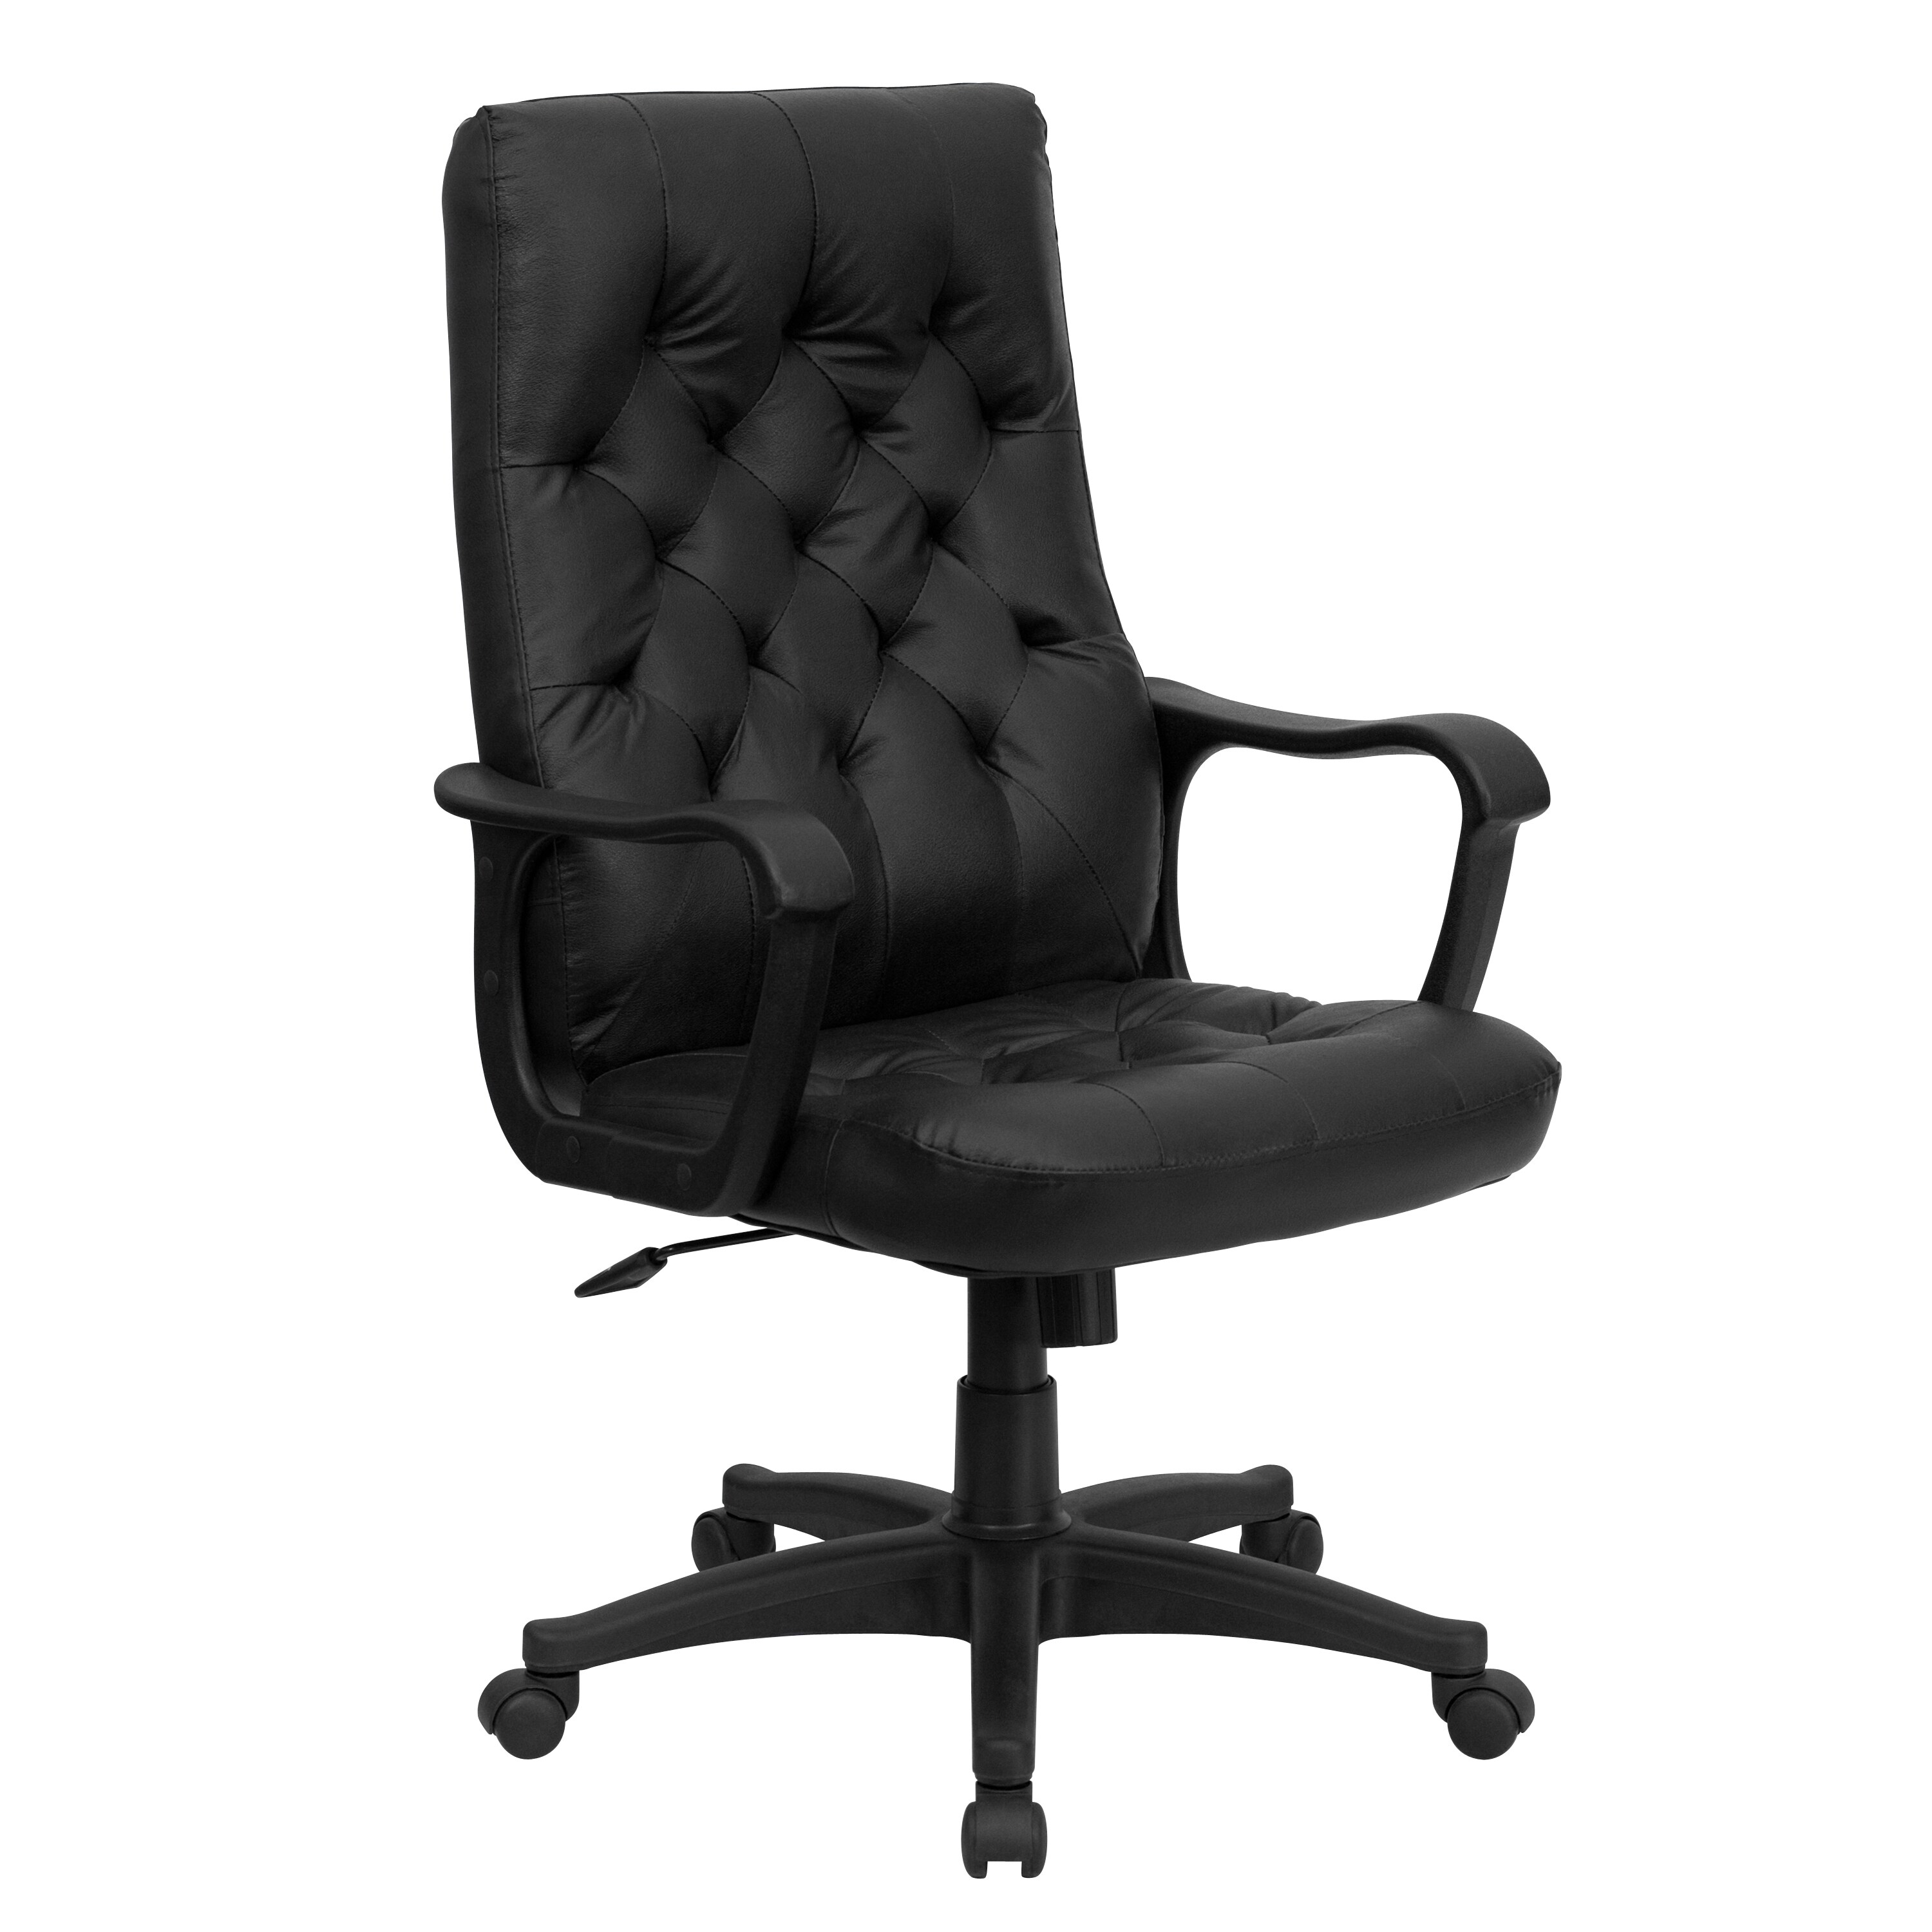 Ruspite Traditional Black Leather Executive Adjustable Swivel Office